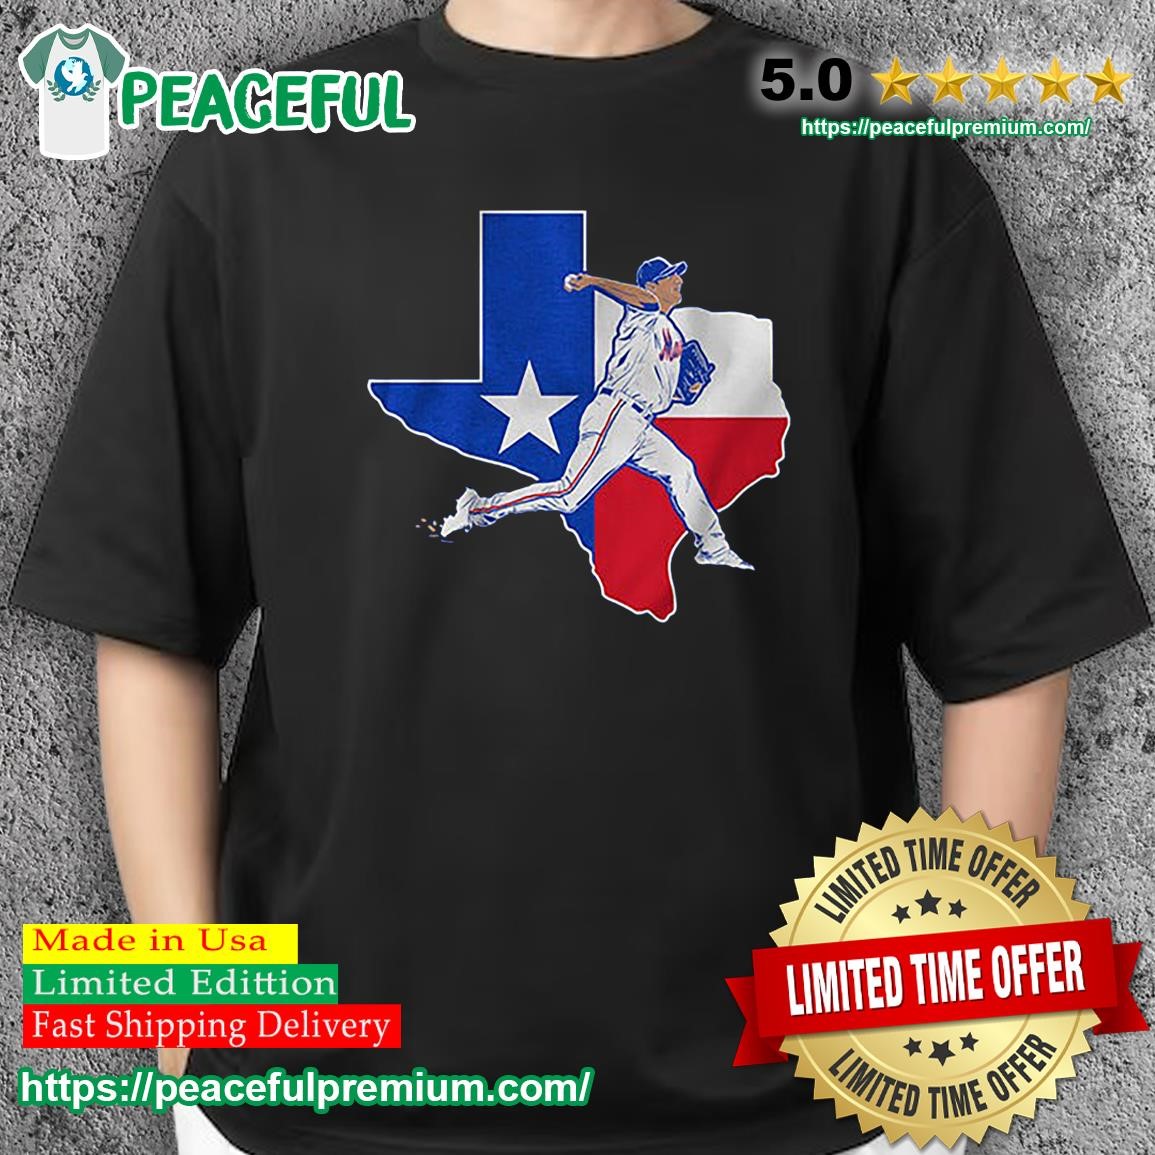 texas rangers shirts target